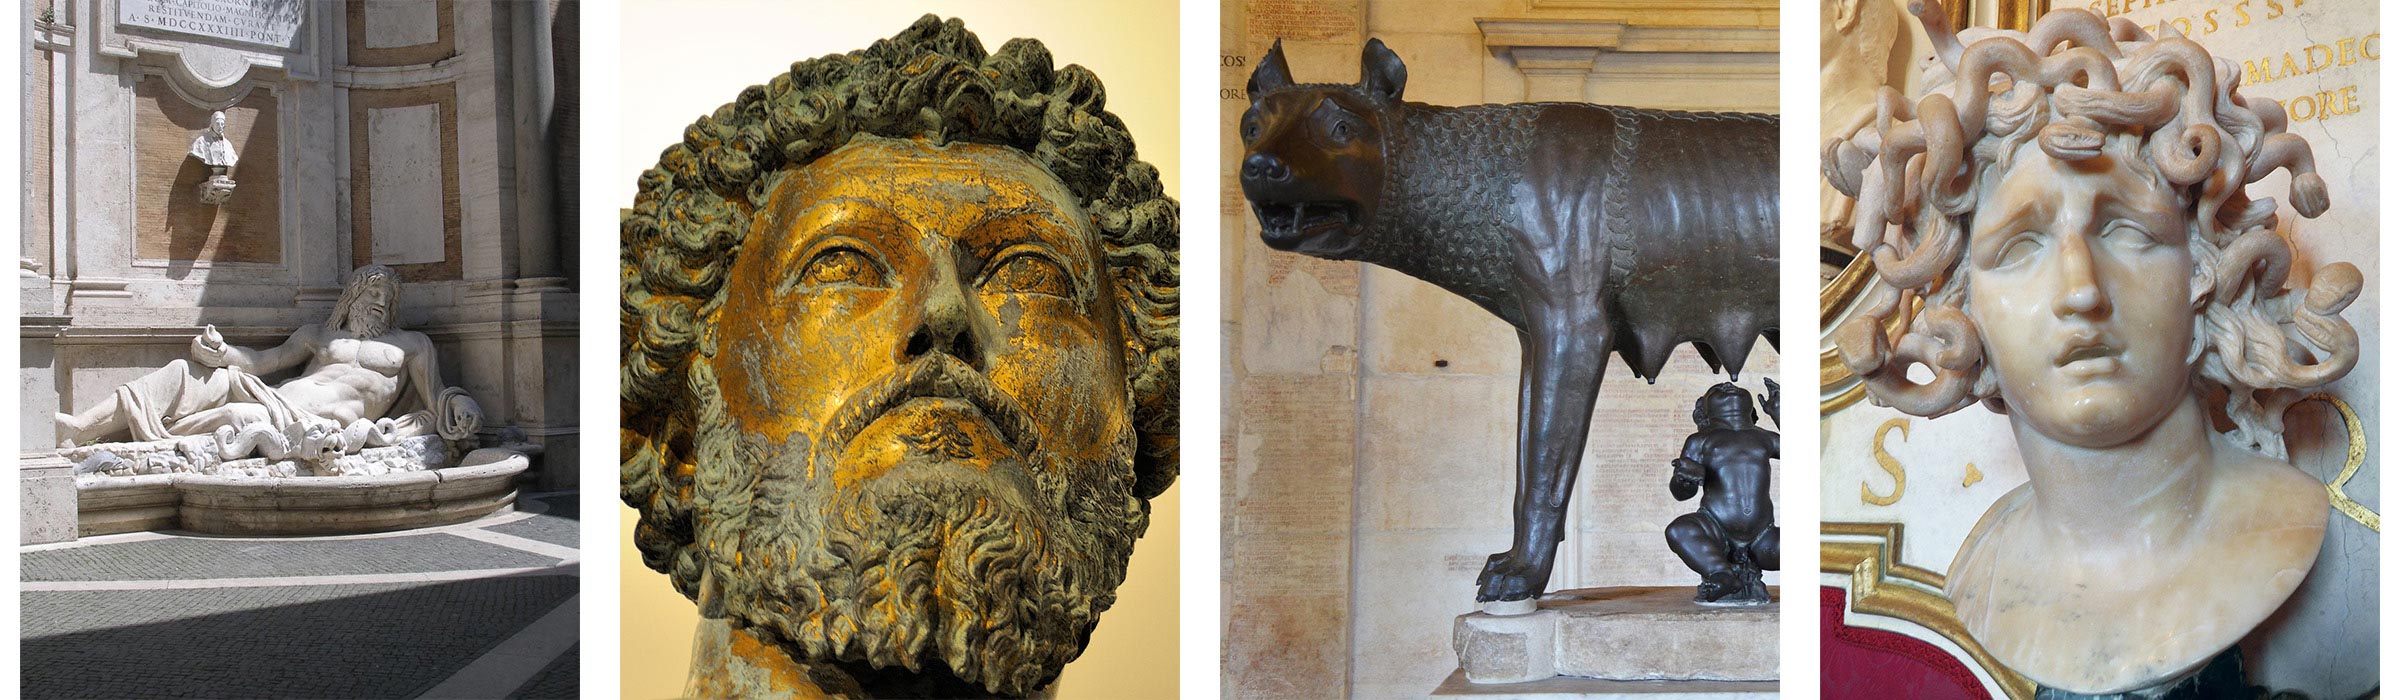 Nuova Ala | Statua Equestre Marco Aurelio | Lupa Capitolina | Medusa di Bernini